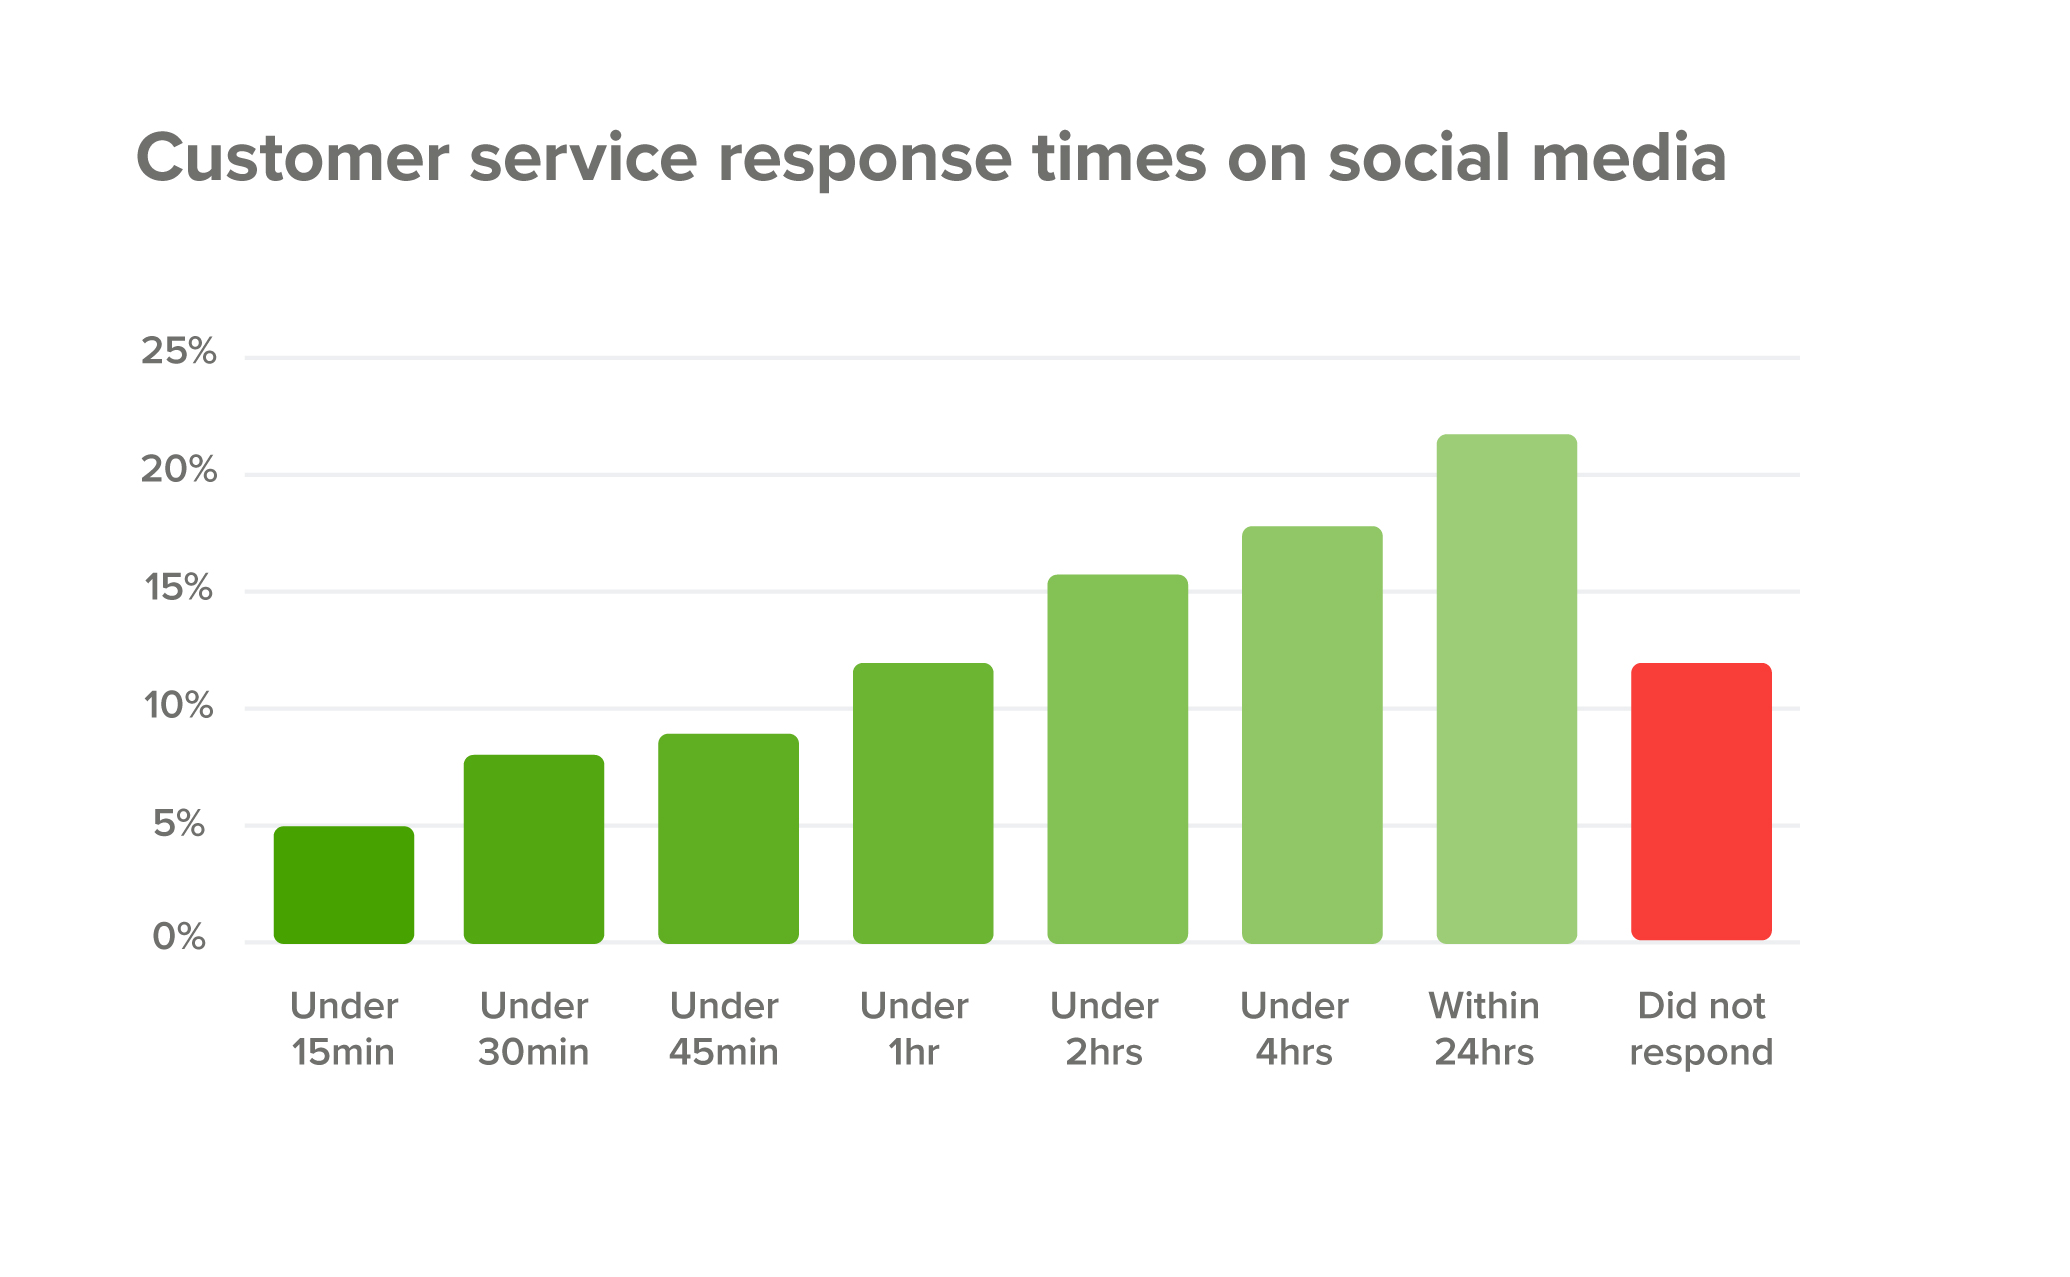 Customer service response times atop social media